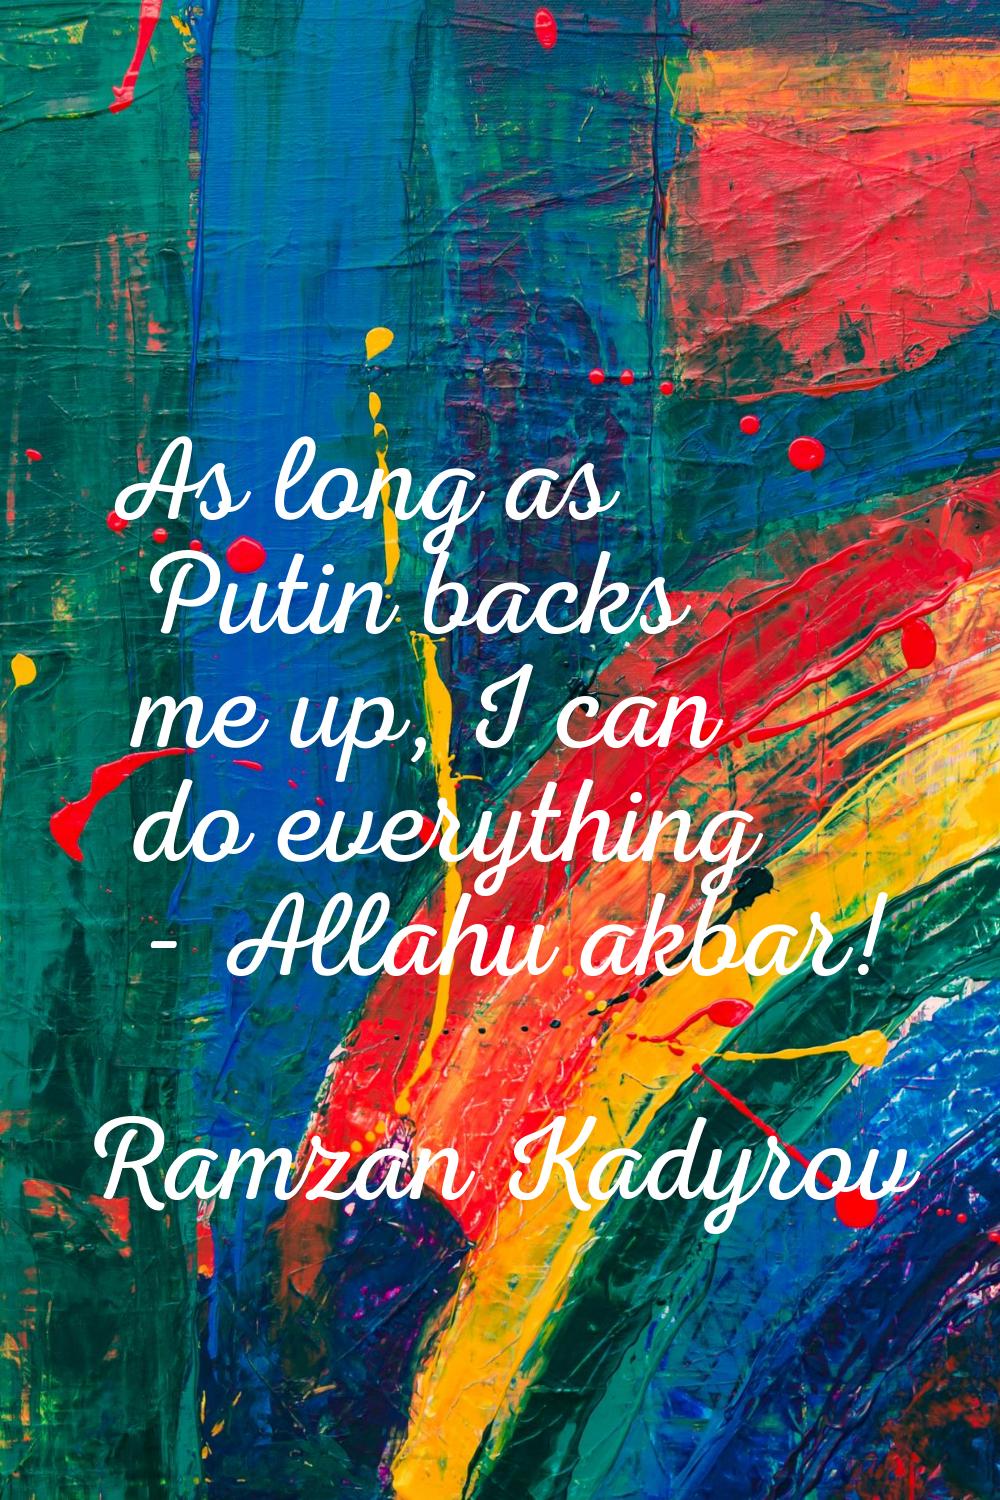 As long as Putin backs me up, I can do everything - Allahu akbar!